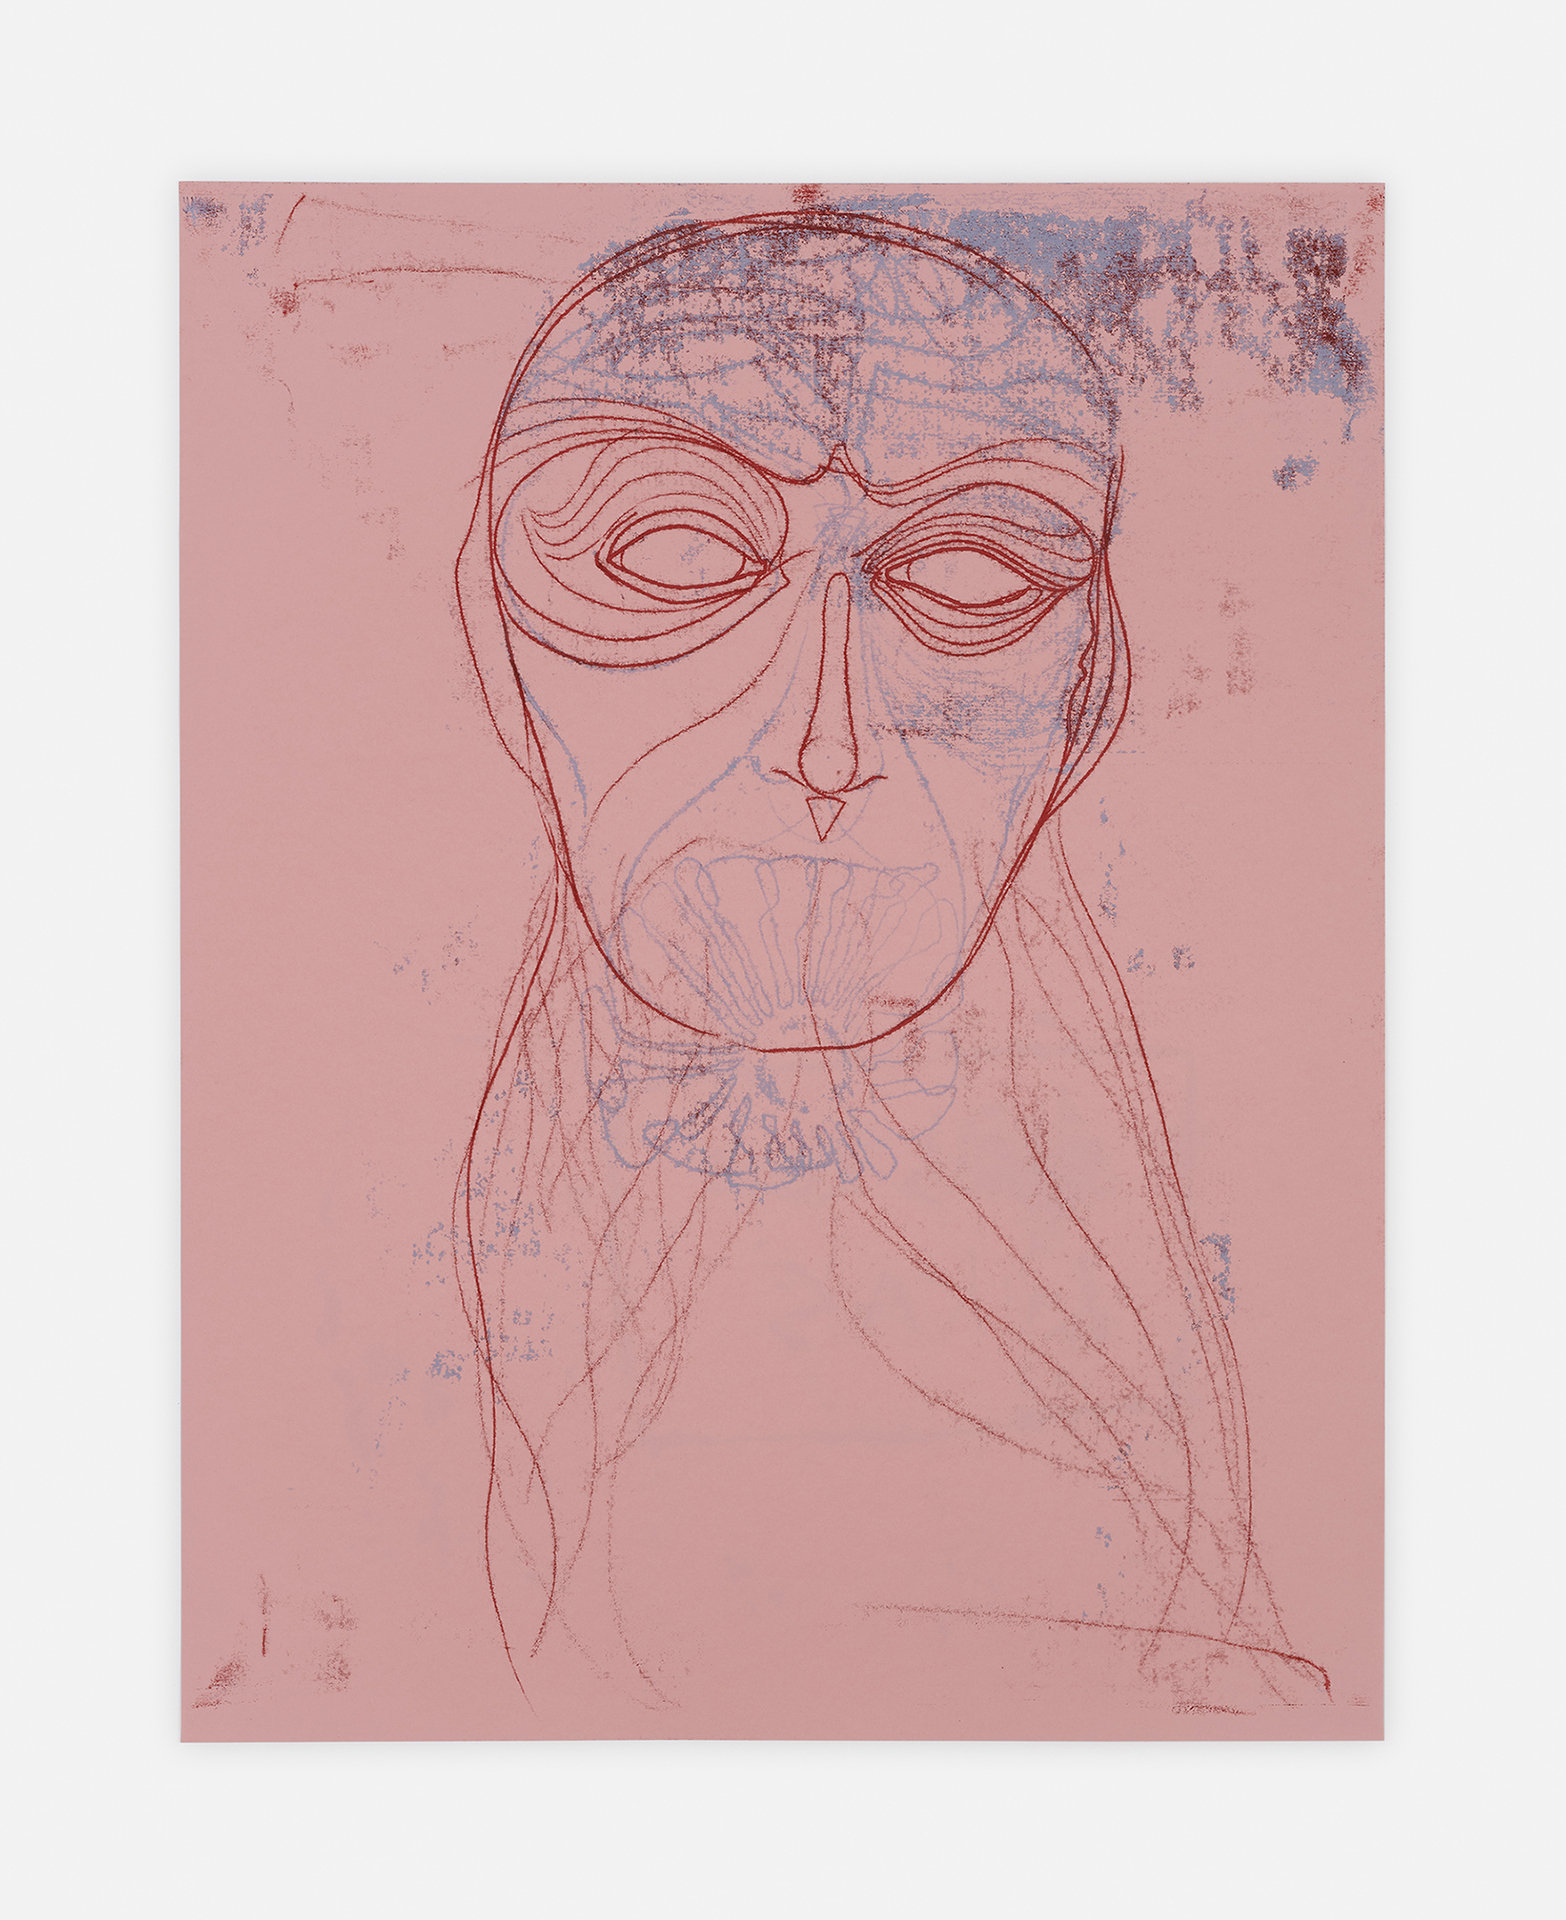 Lukas Schmenger, untitled (head), 2019, ink on paper, 65 x 50 cm